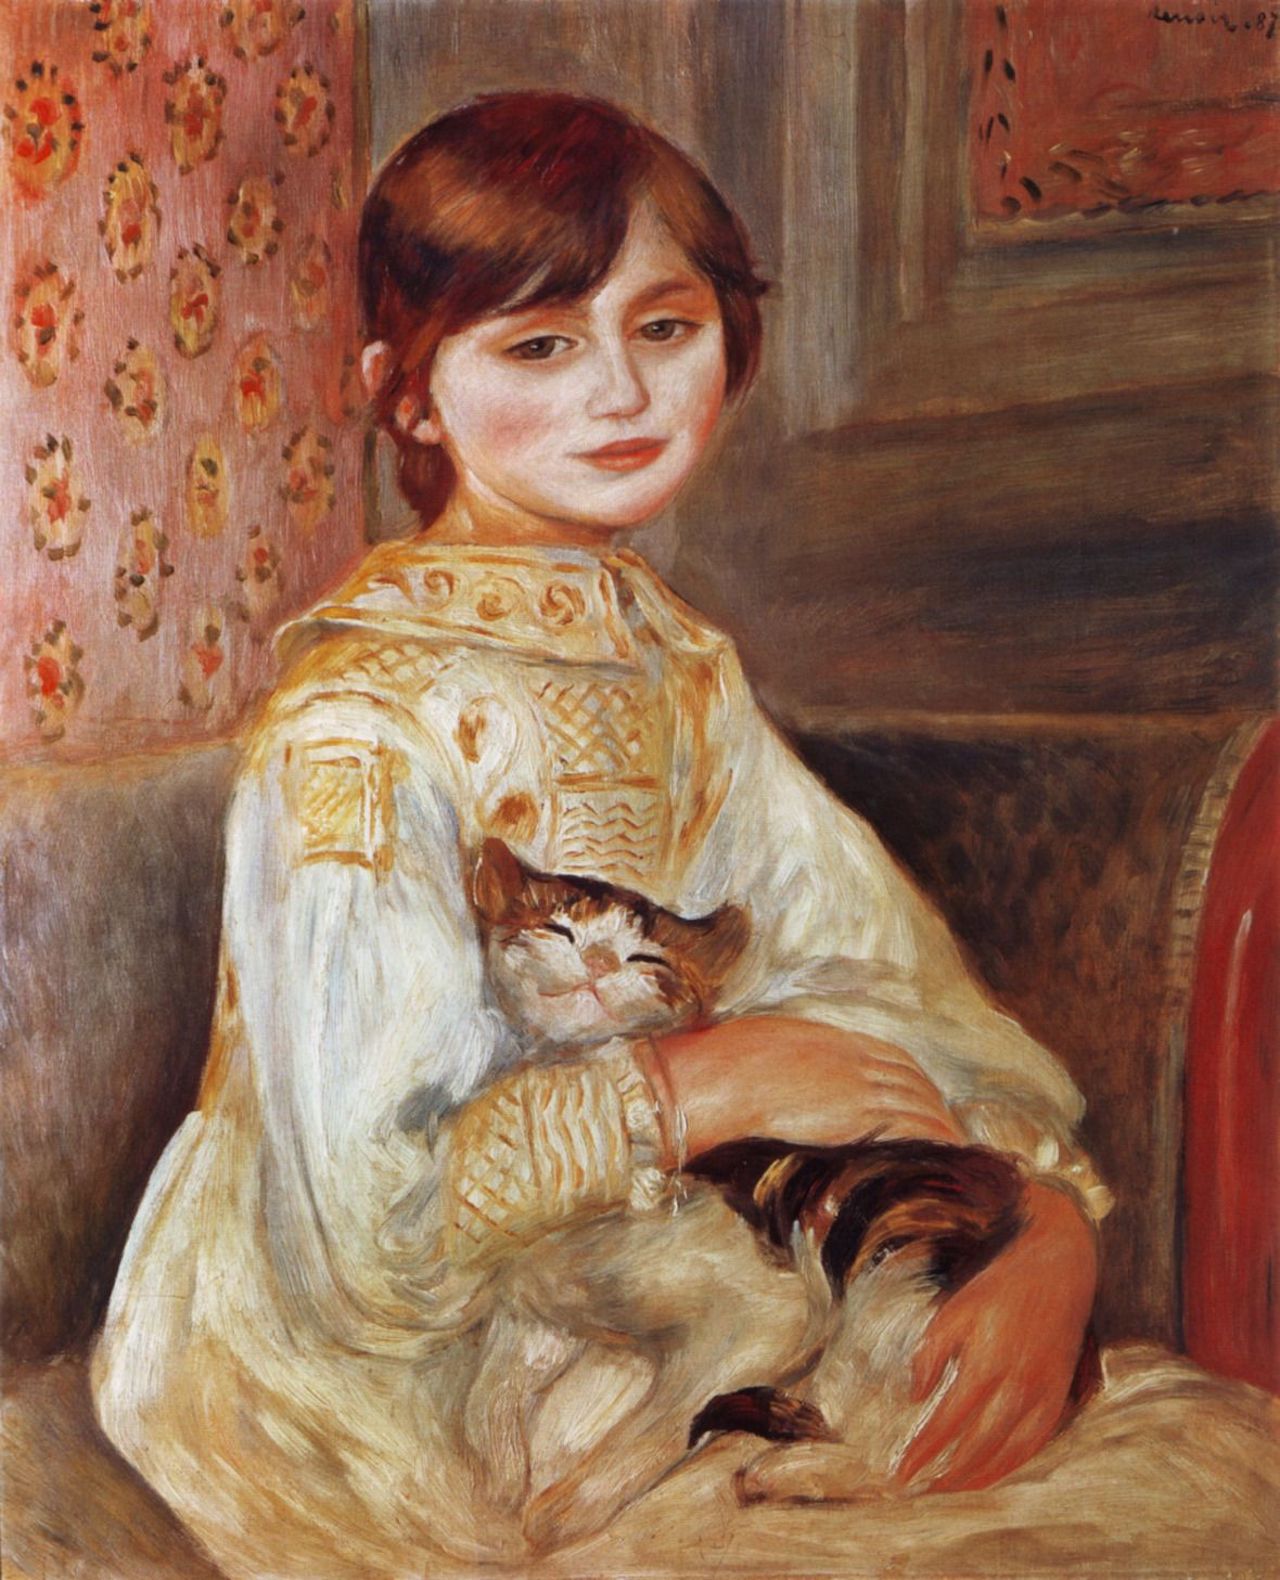 Bambina con gatto by Pierre-Auguste Renoir - 1887 - 54 x 65 cm Musée d'Orsay